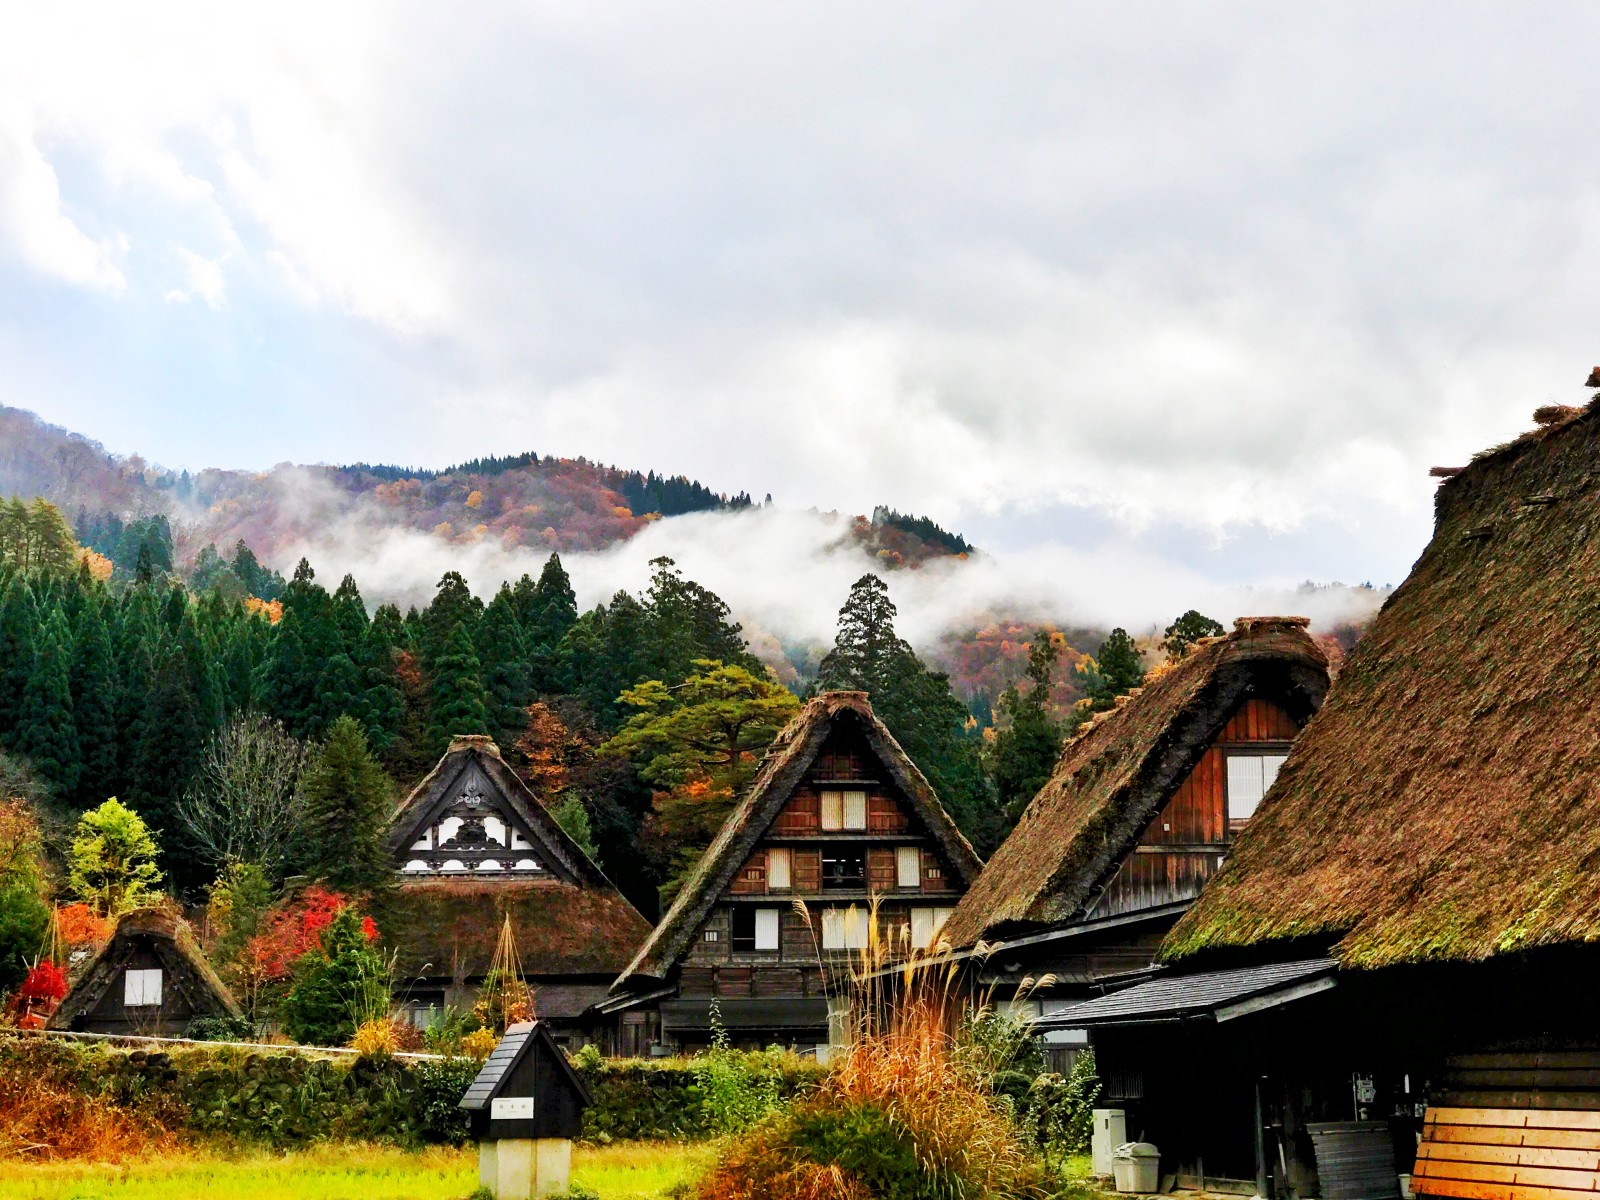 Shirakawago Village in autumn colour